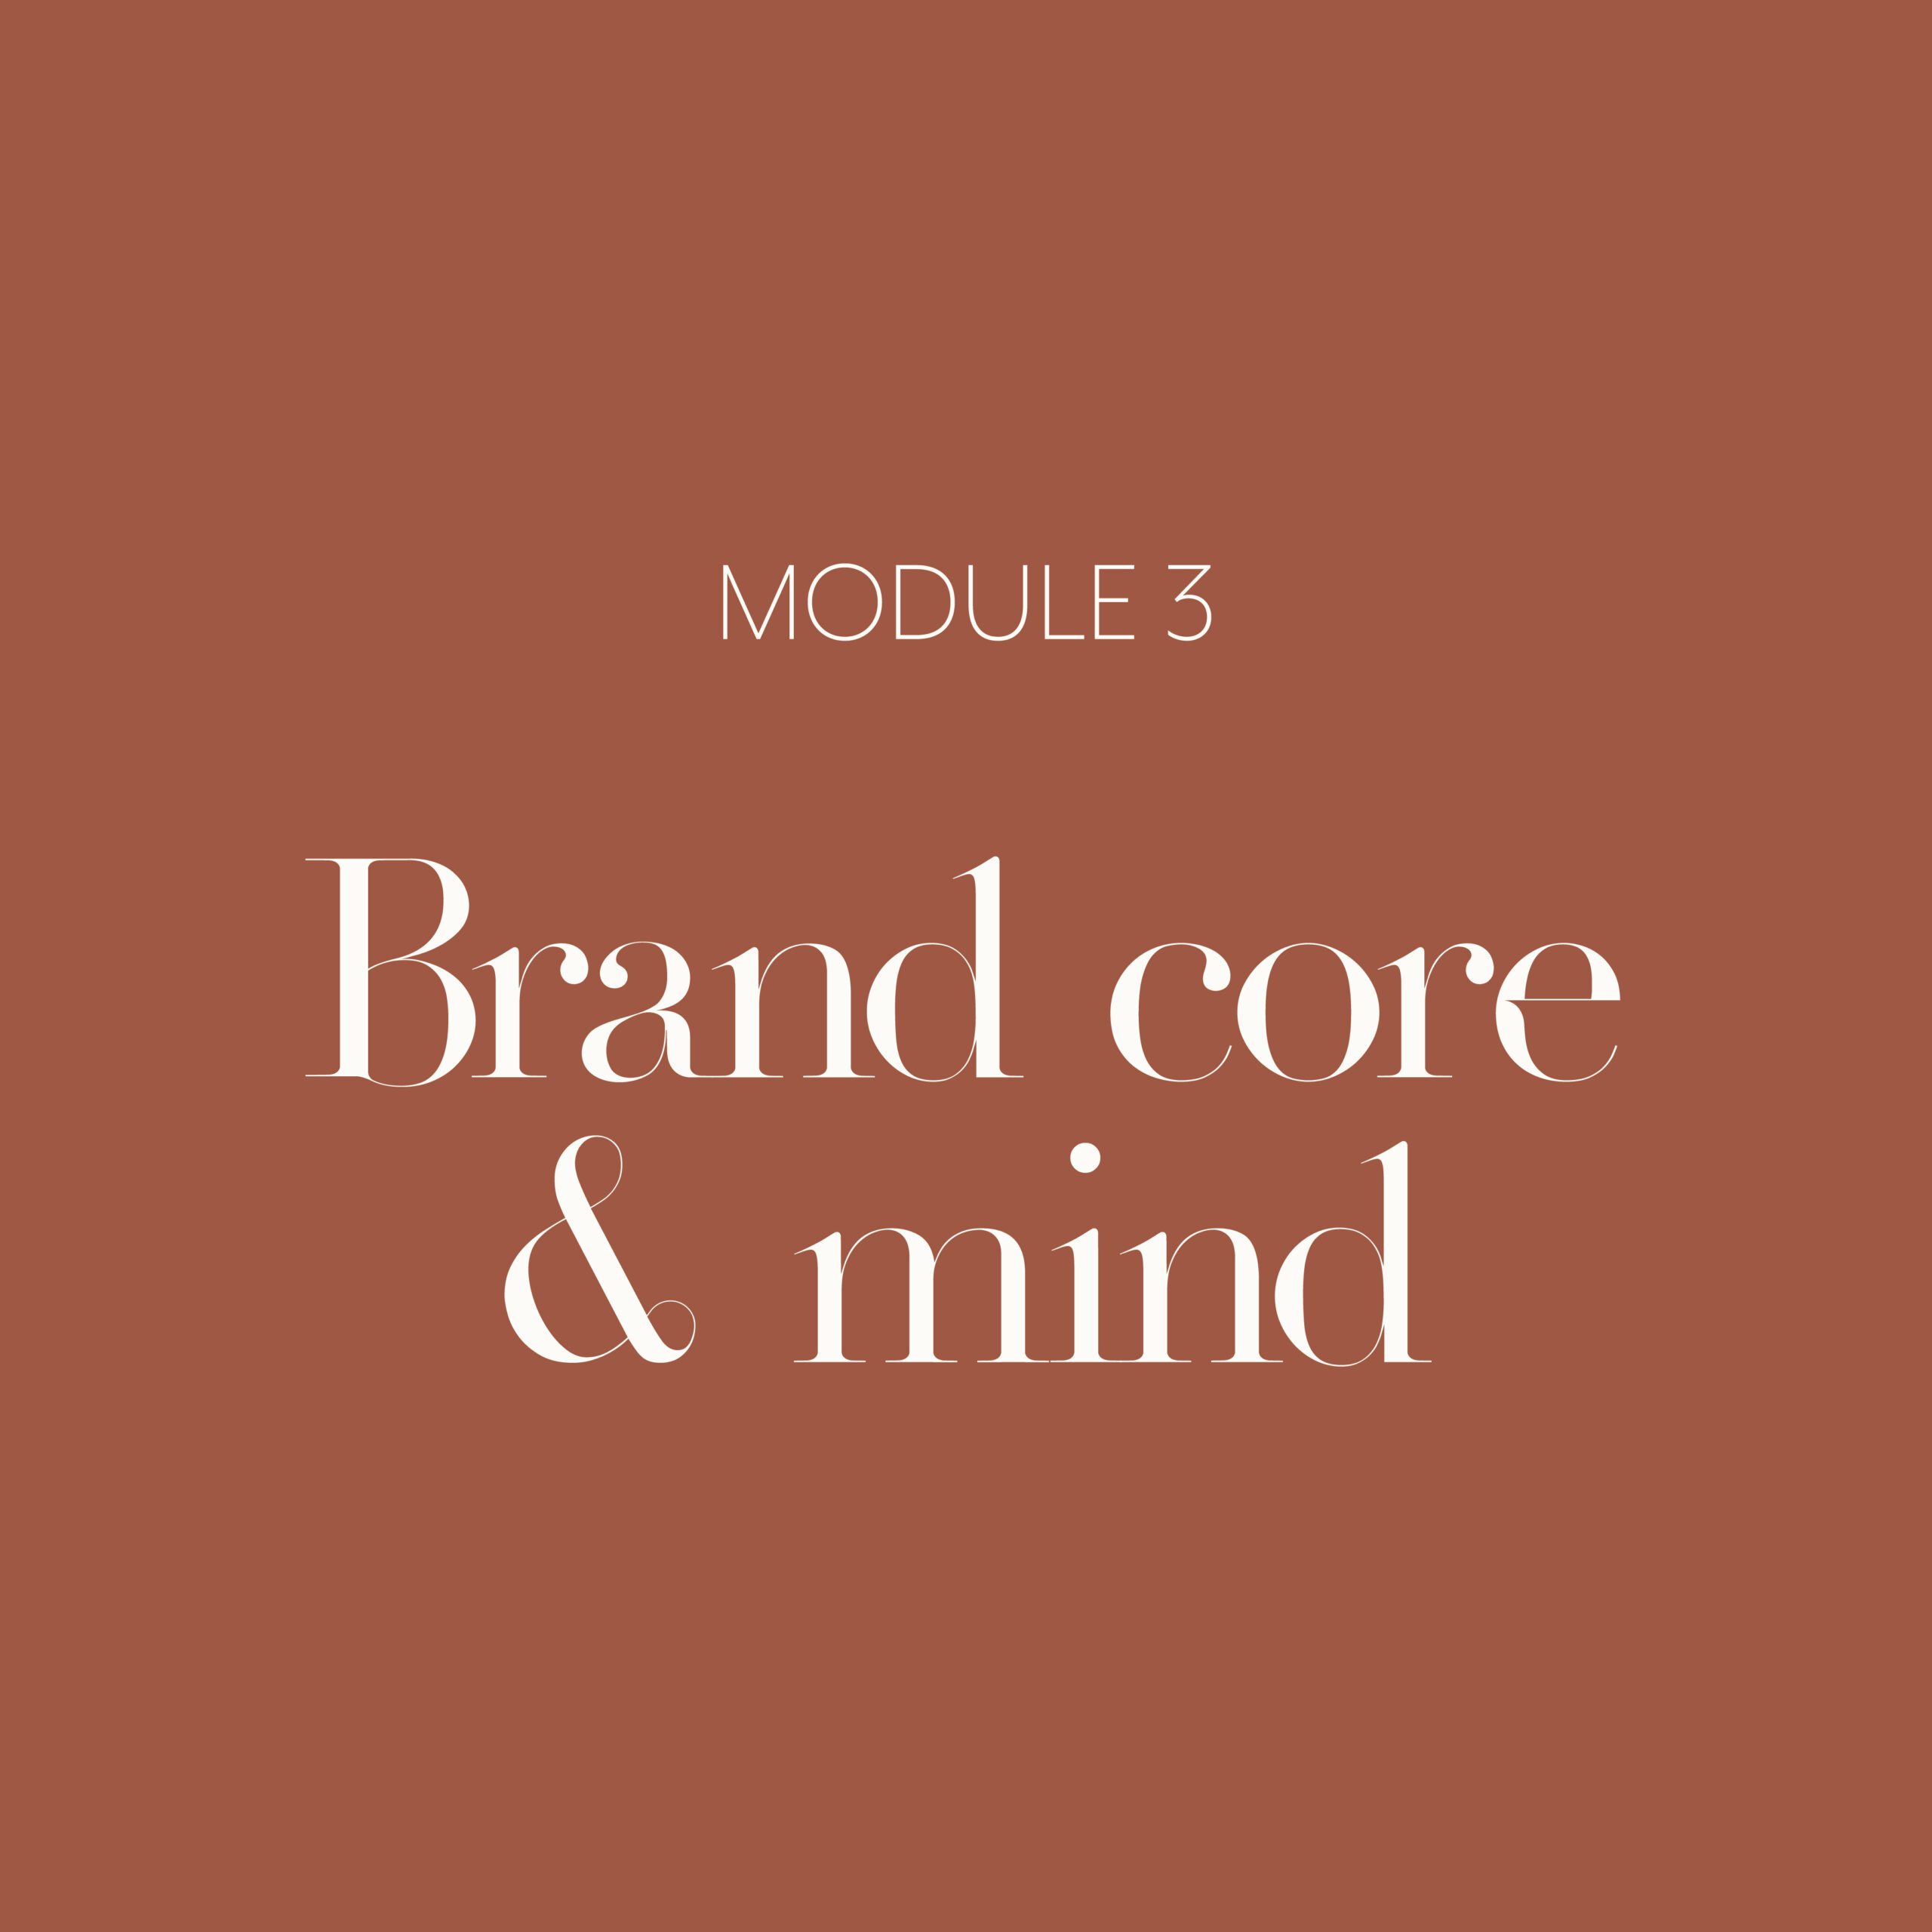 Brand core & mind